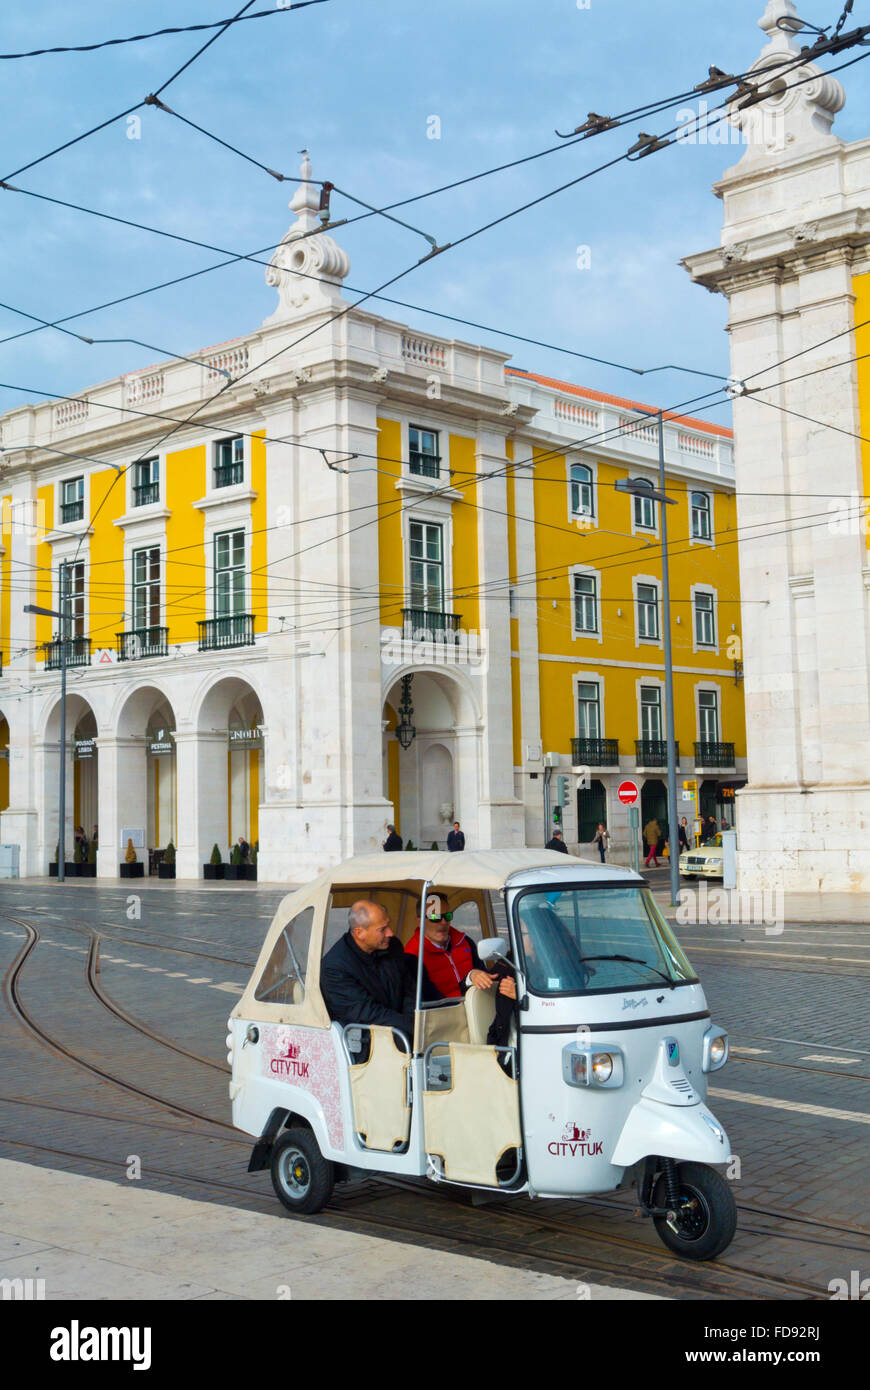 Tuk Tuk transport, sightseeing tour vehicle, Praça do Comércio, Baixa, Lisbon, Portugal Stock Photo